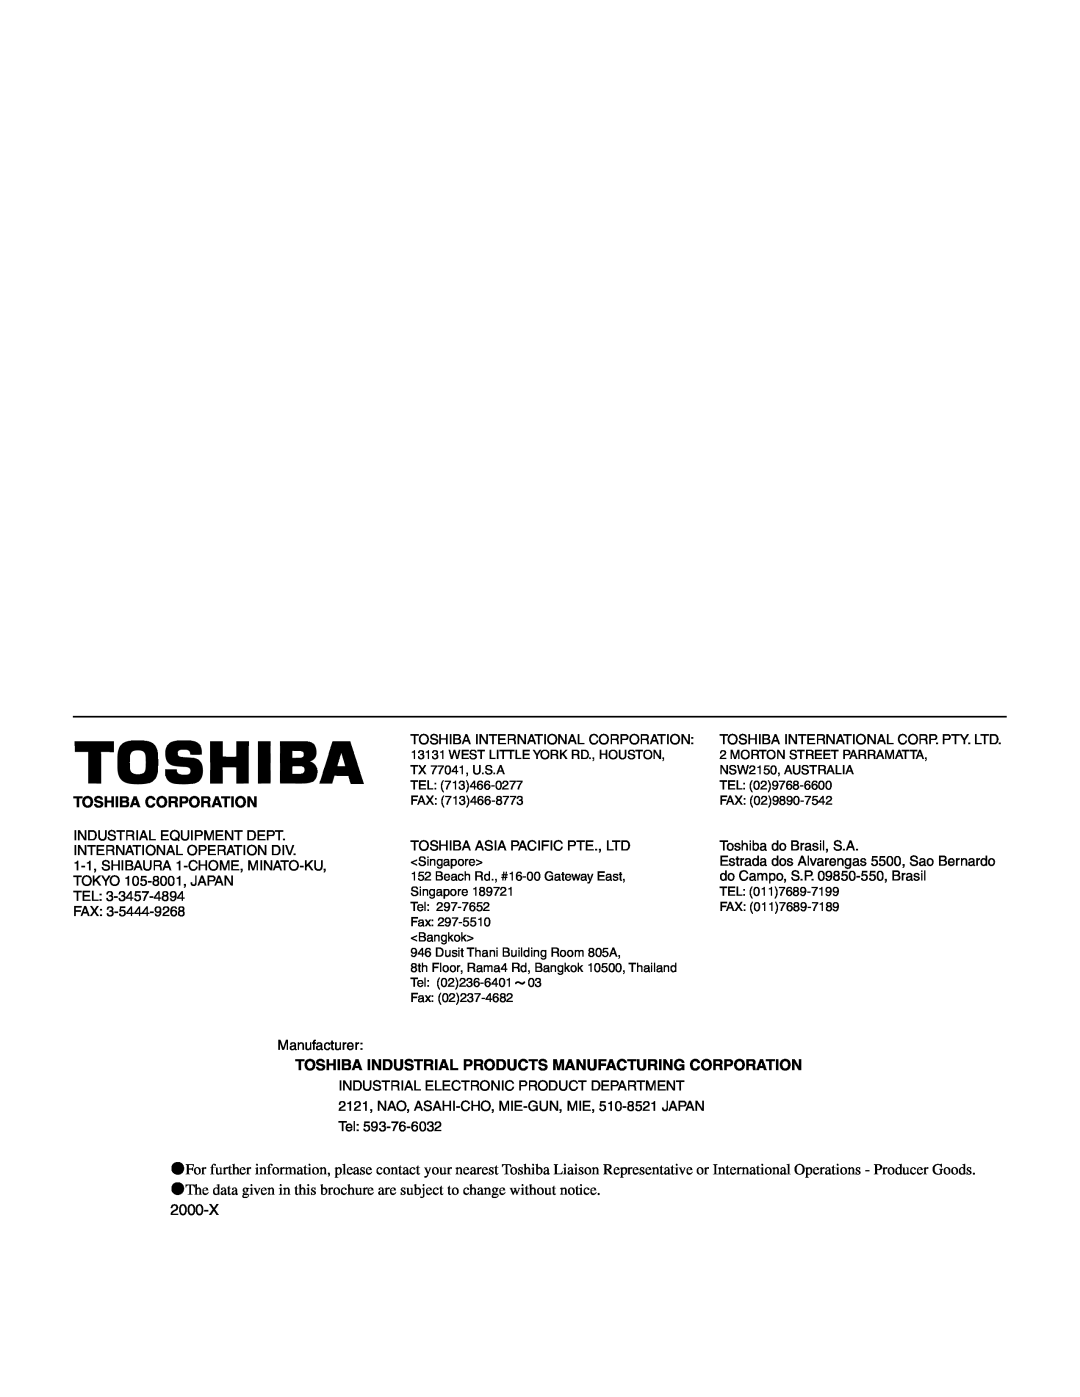 Toshiba VF-S9 manual Toshiba Corporation, Toshiba Industrial Products Manufacturing Corporation 